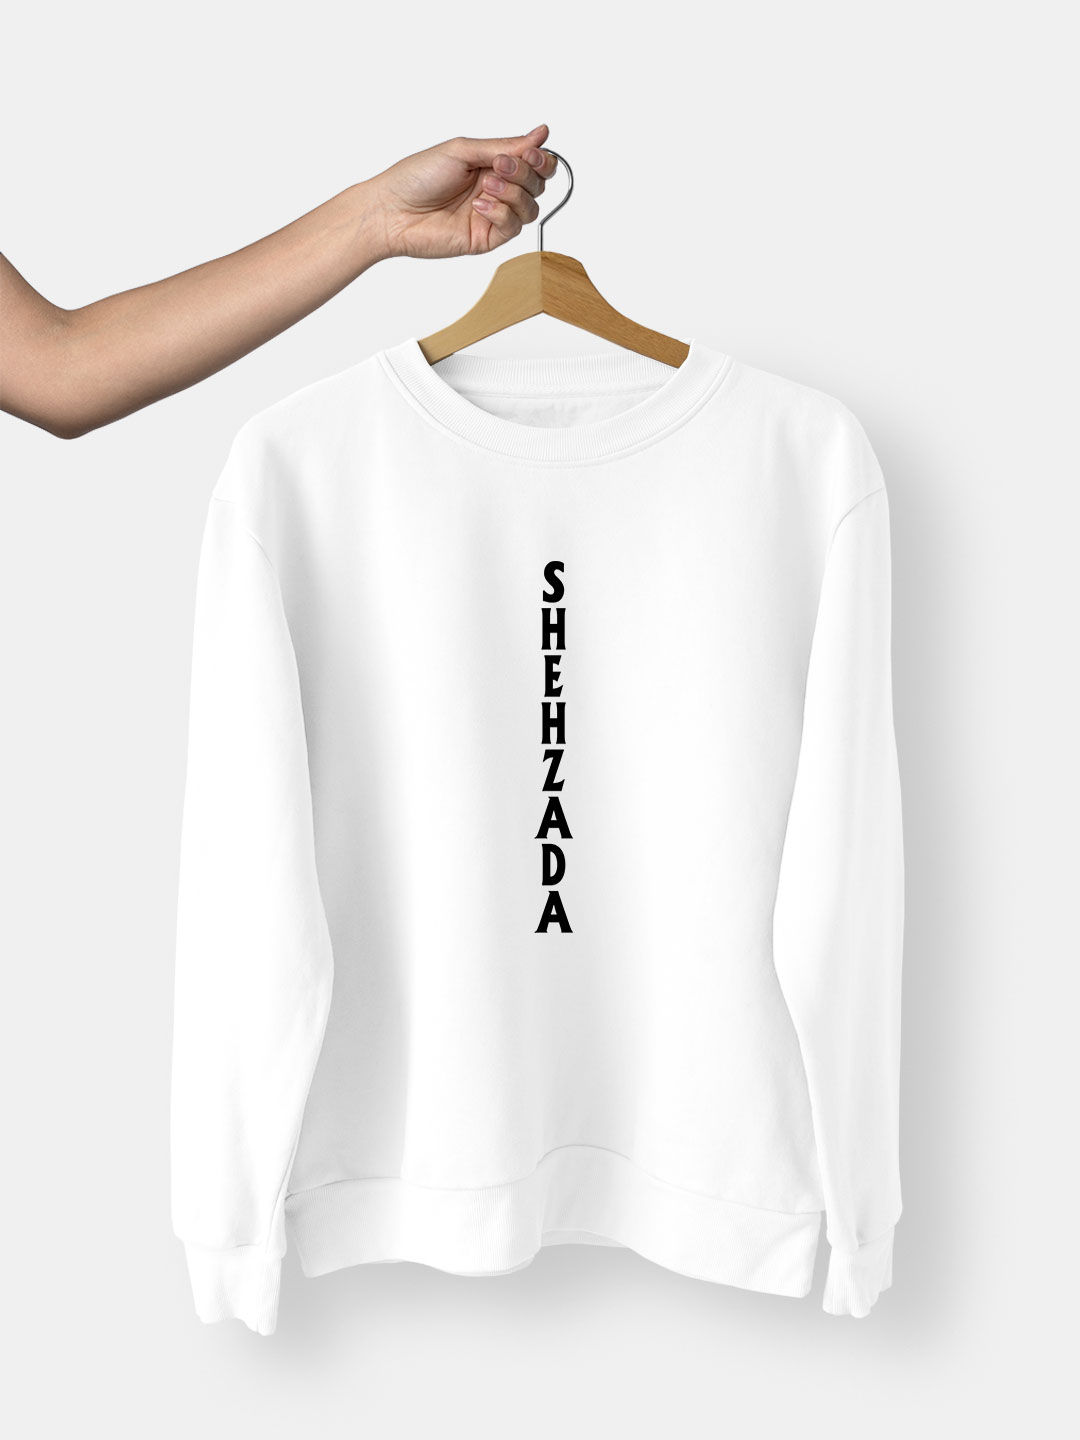 Shehzada Vertical Black - Mens Designer Sweatshirt